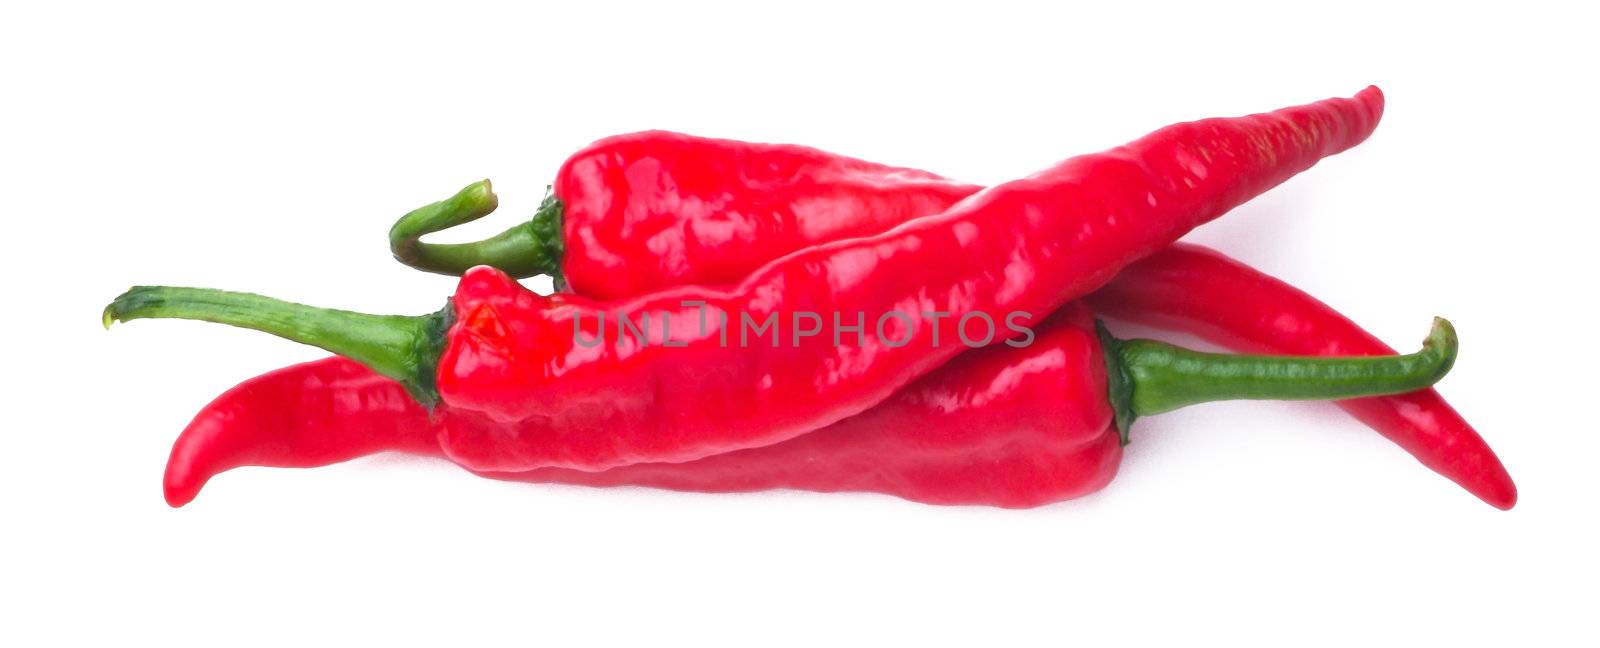 Red hot chili pepper by heinteh